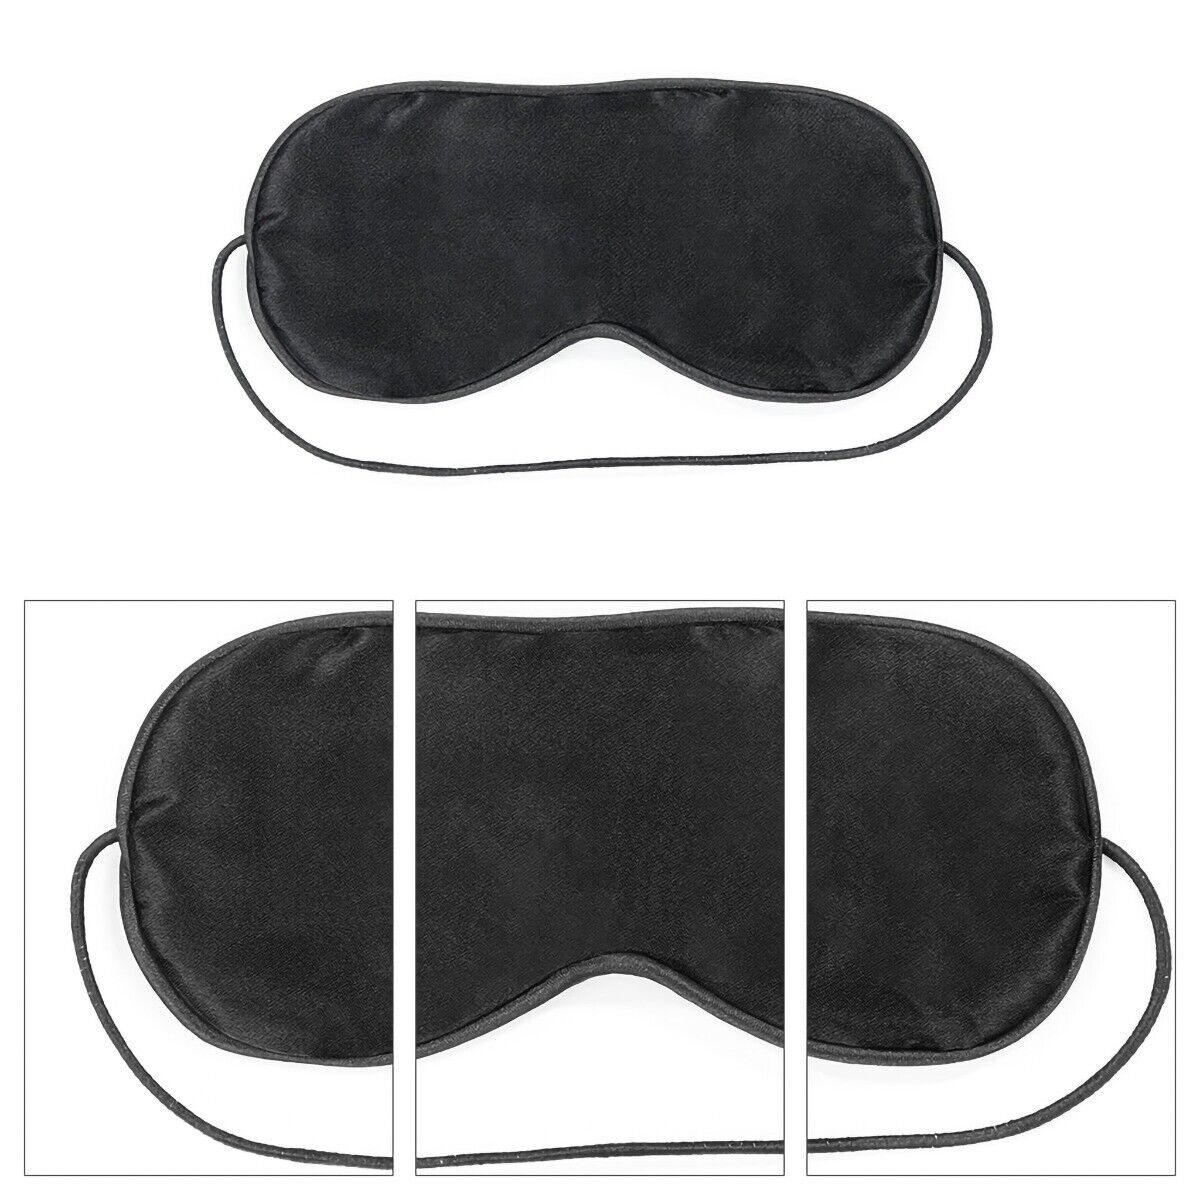 Beginner's Deluxe SM Fetish Bondage Kit Blindfold Mask Flogger Handcuffs Sex Toy